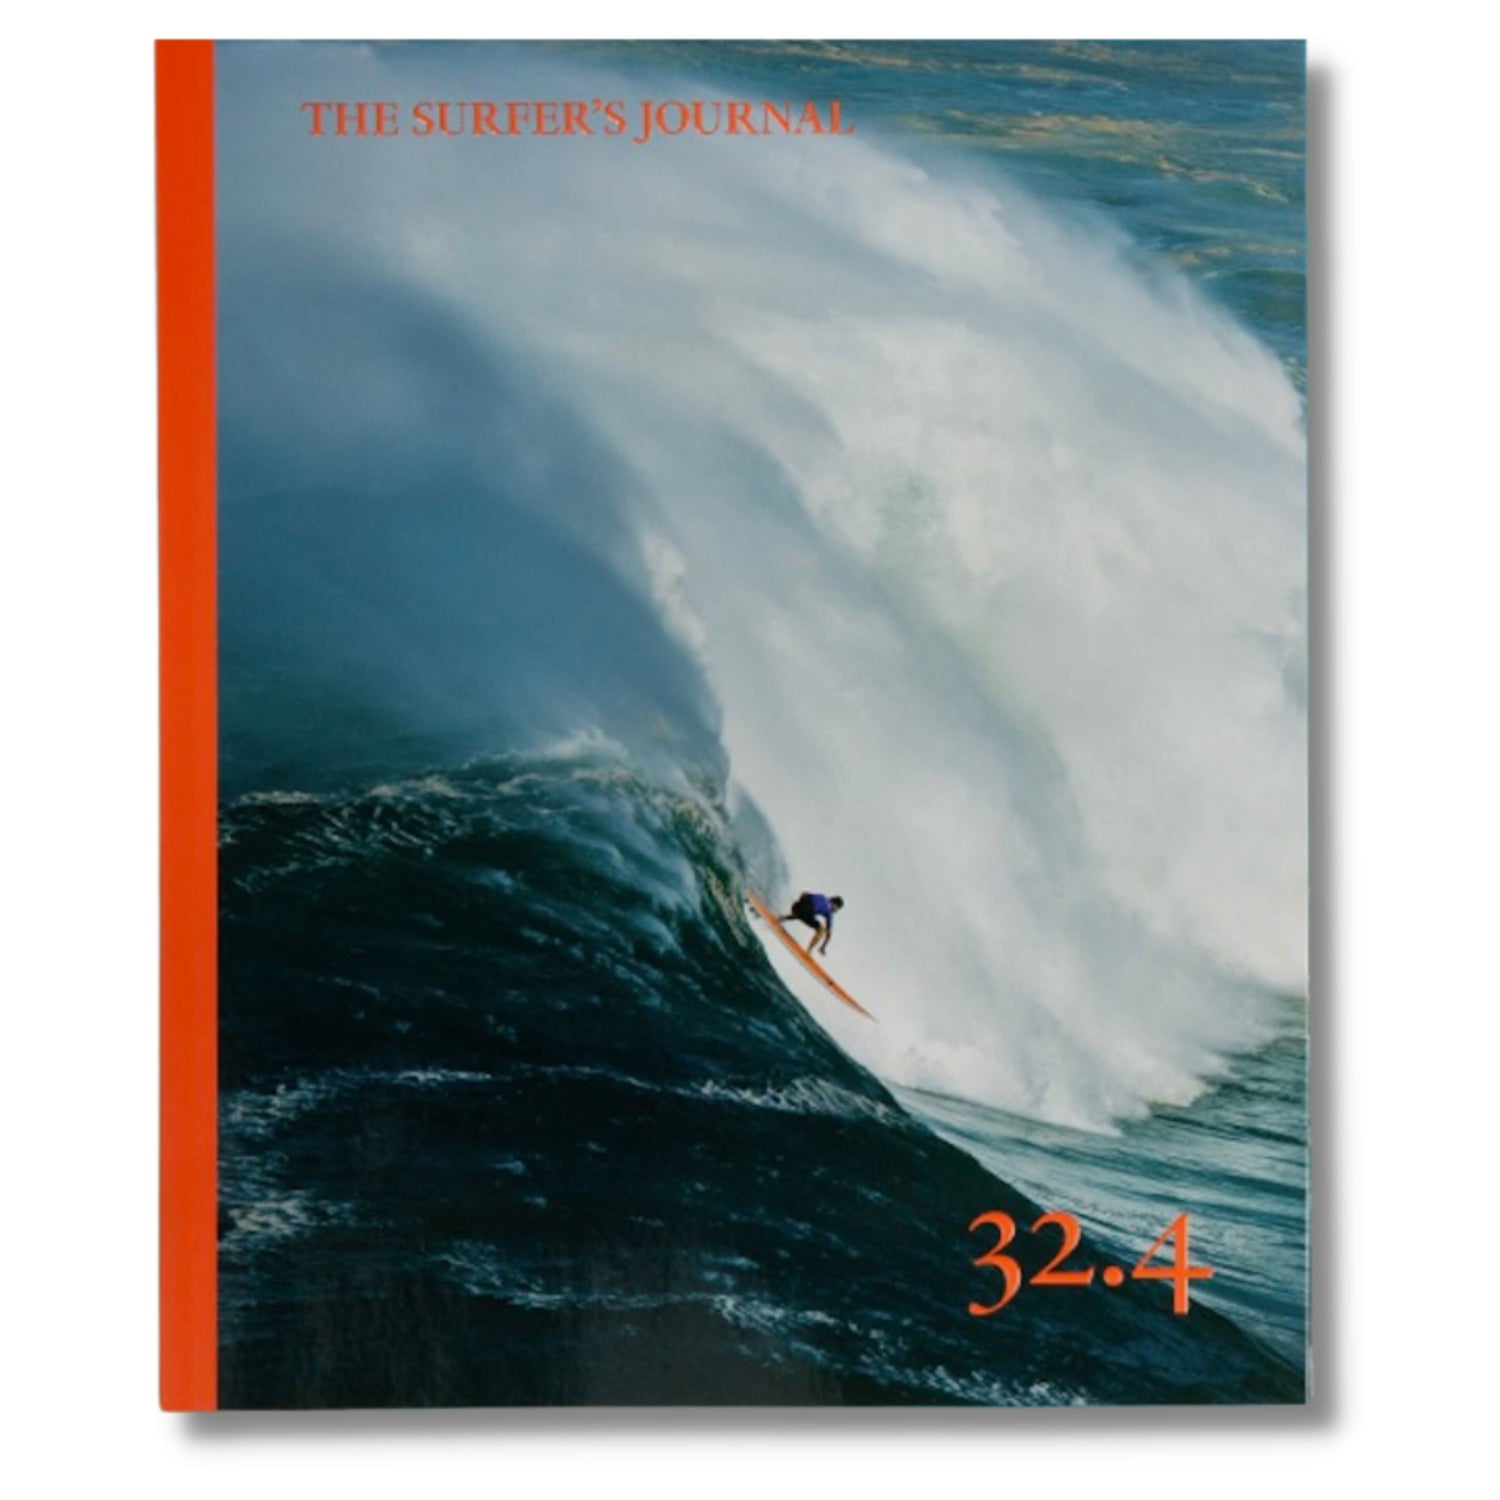 THE SURFER'S JOURNAL 32.4. - REBEL FIN CO.